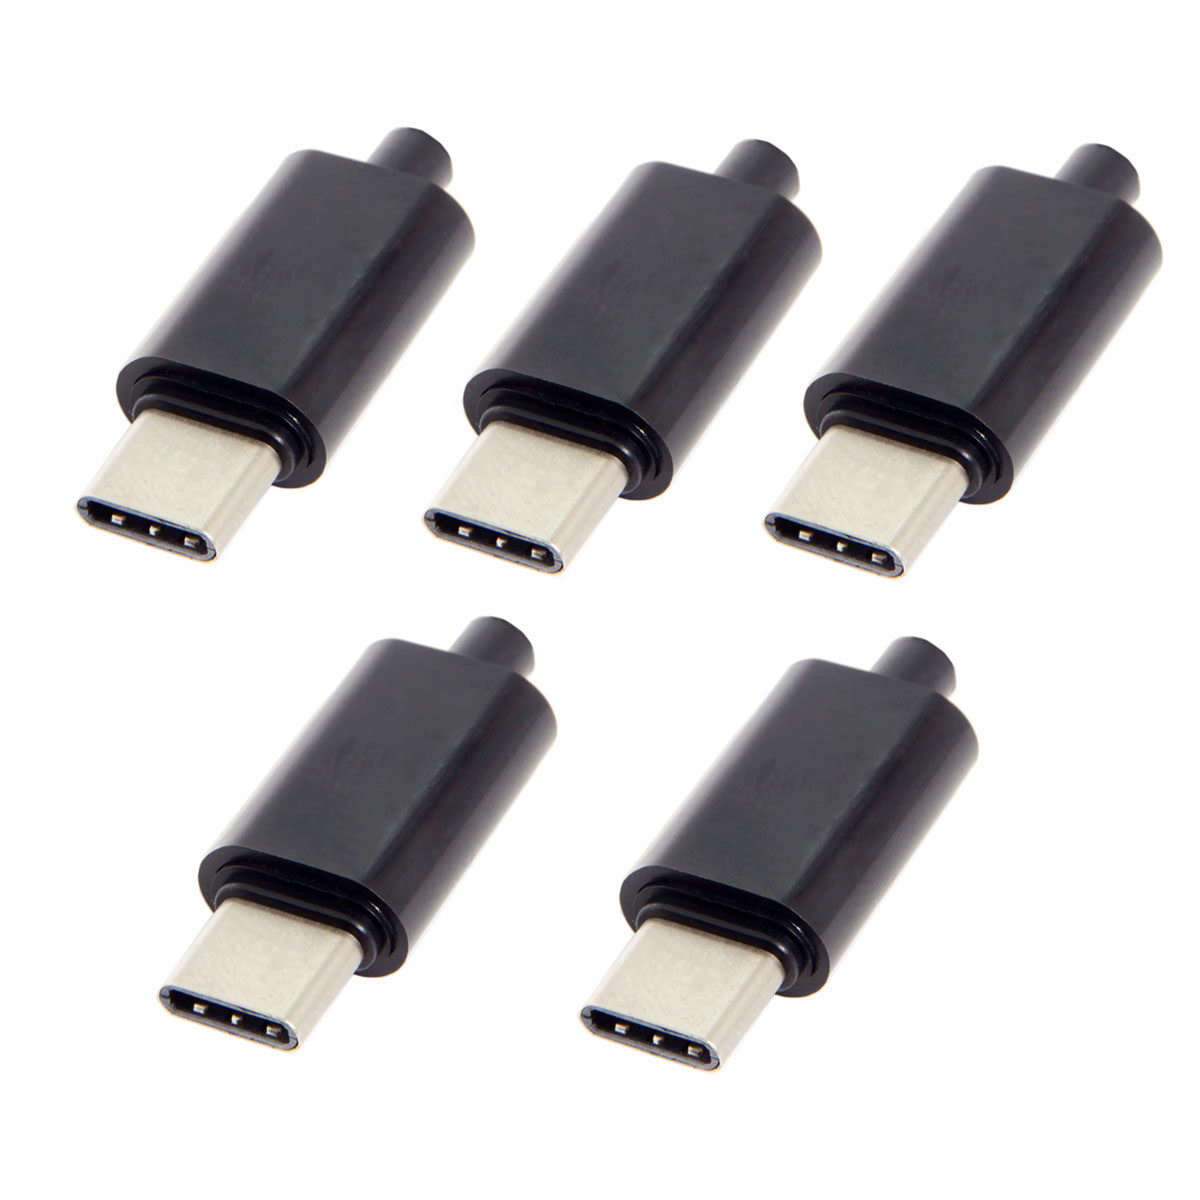 5PCS/Lot DIY 24Pin USB Type-C USB-C Male OTG Host Type 5.1k Resistor with Black Housing Cover